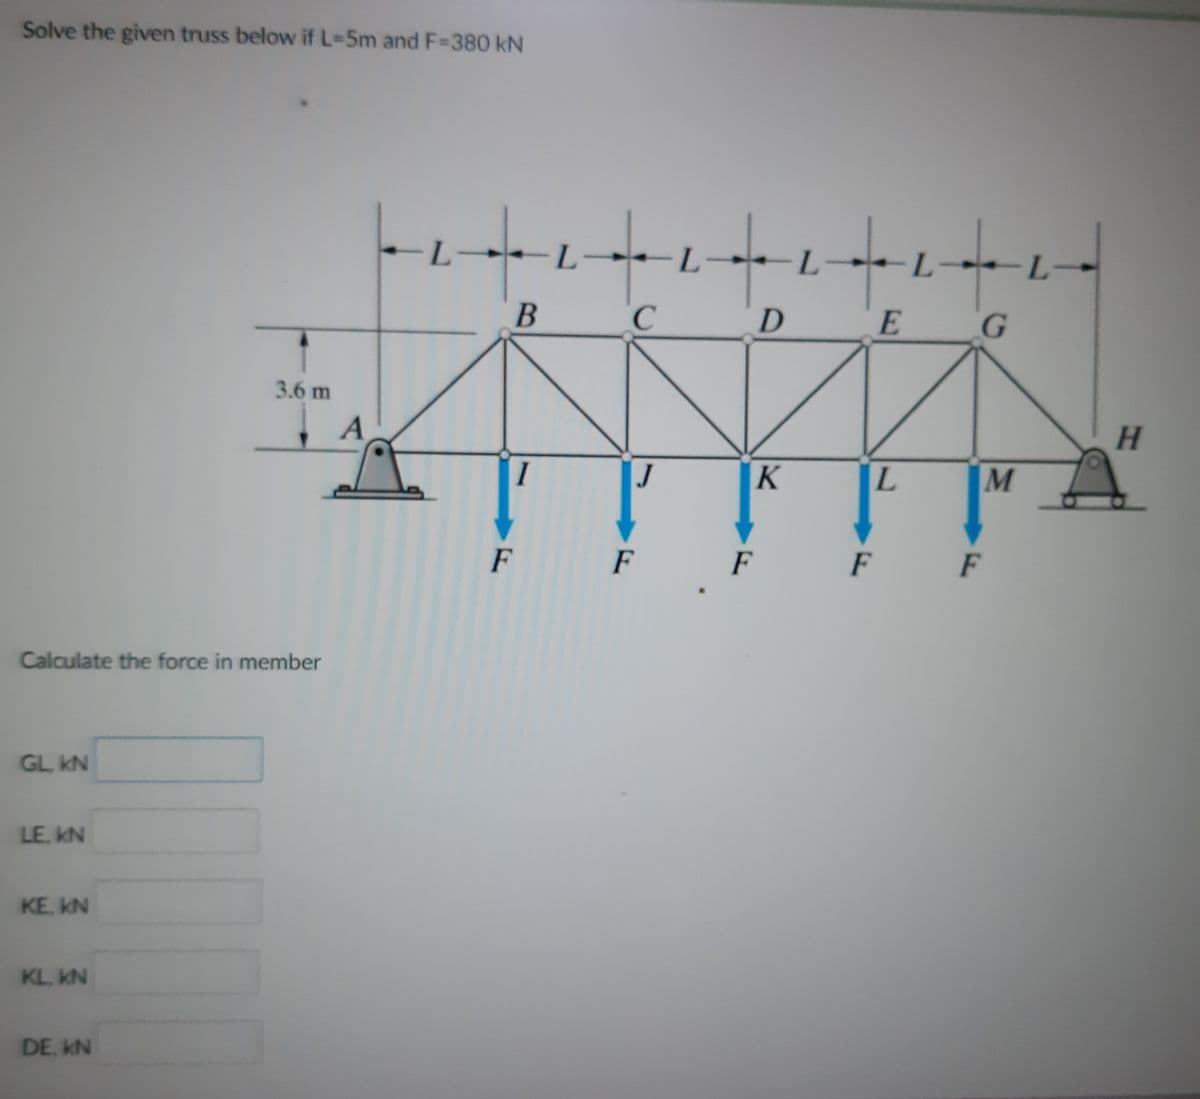 Solve the given truss below if L-5m and F-380 kN
L.
:-
L-
L.
G
3.6 m
H.
I
J
L.
F
F
F
F
F
Calculate the force in member
GL kN
LE. kN
KE, KN
KL. KN
DE, KN
